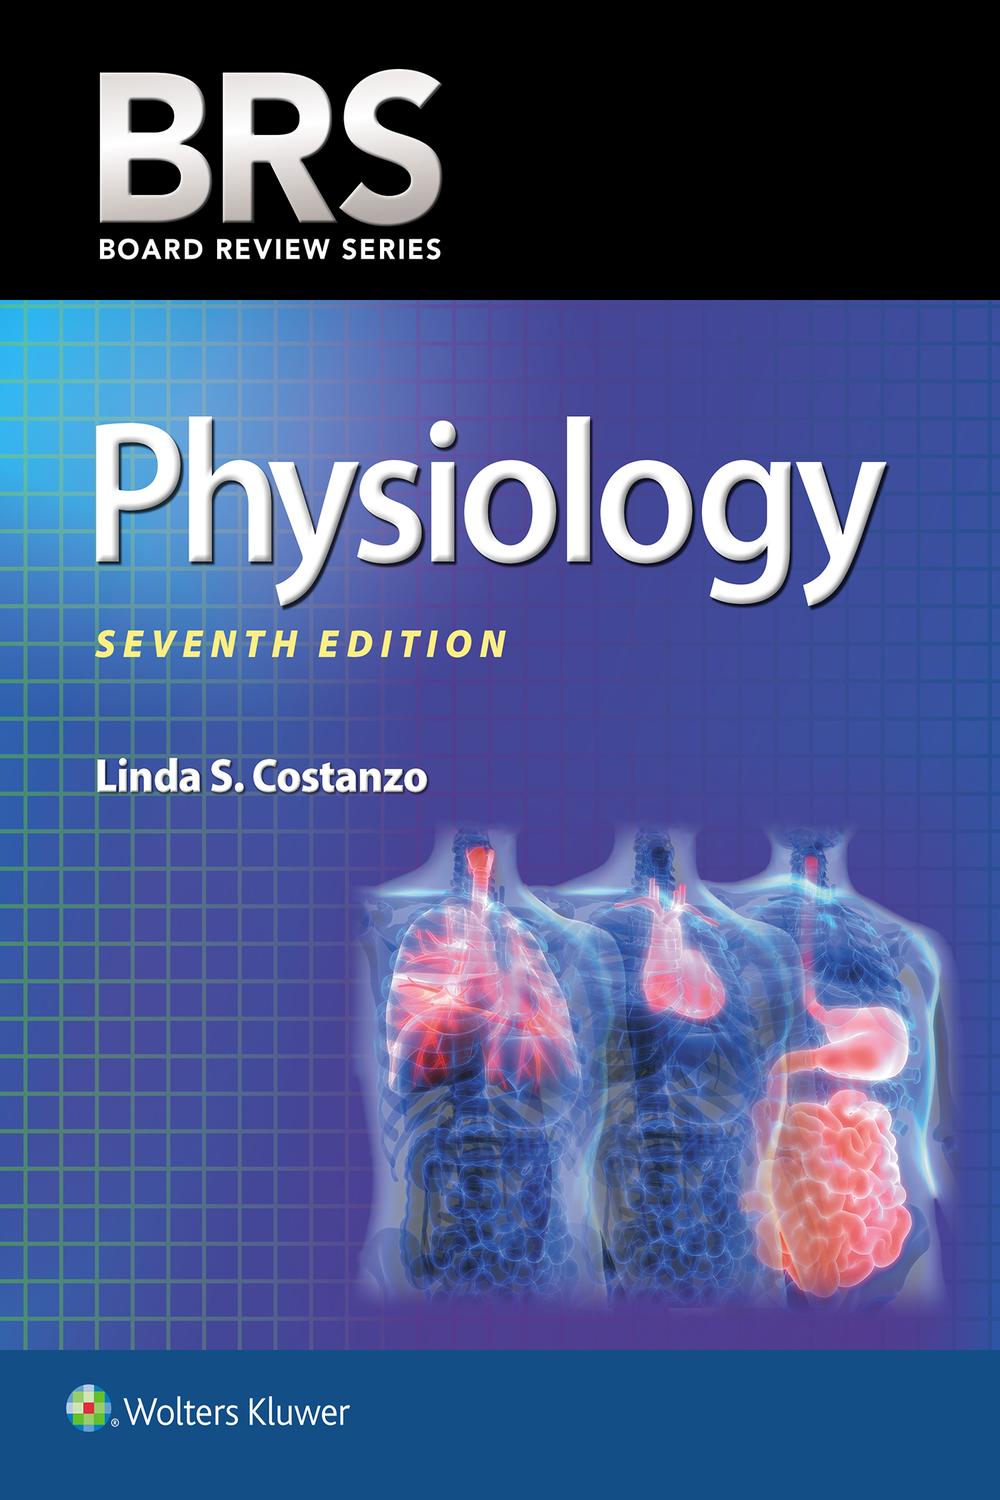 linda costanzo physiology free download pdf